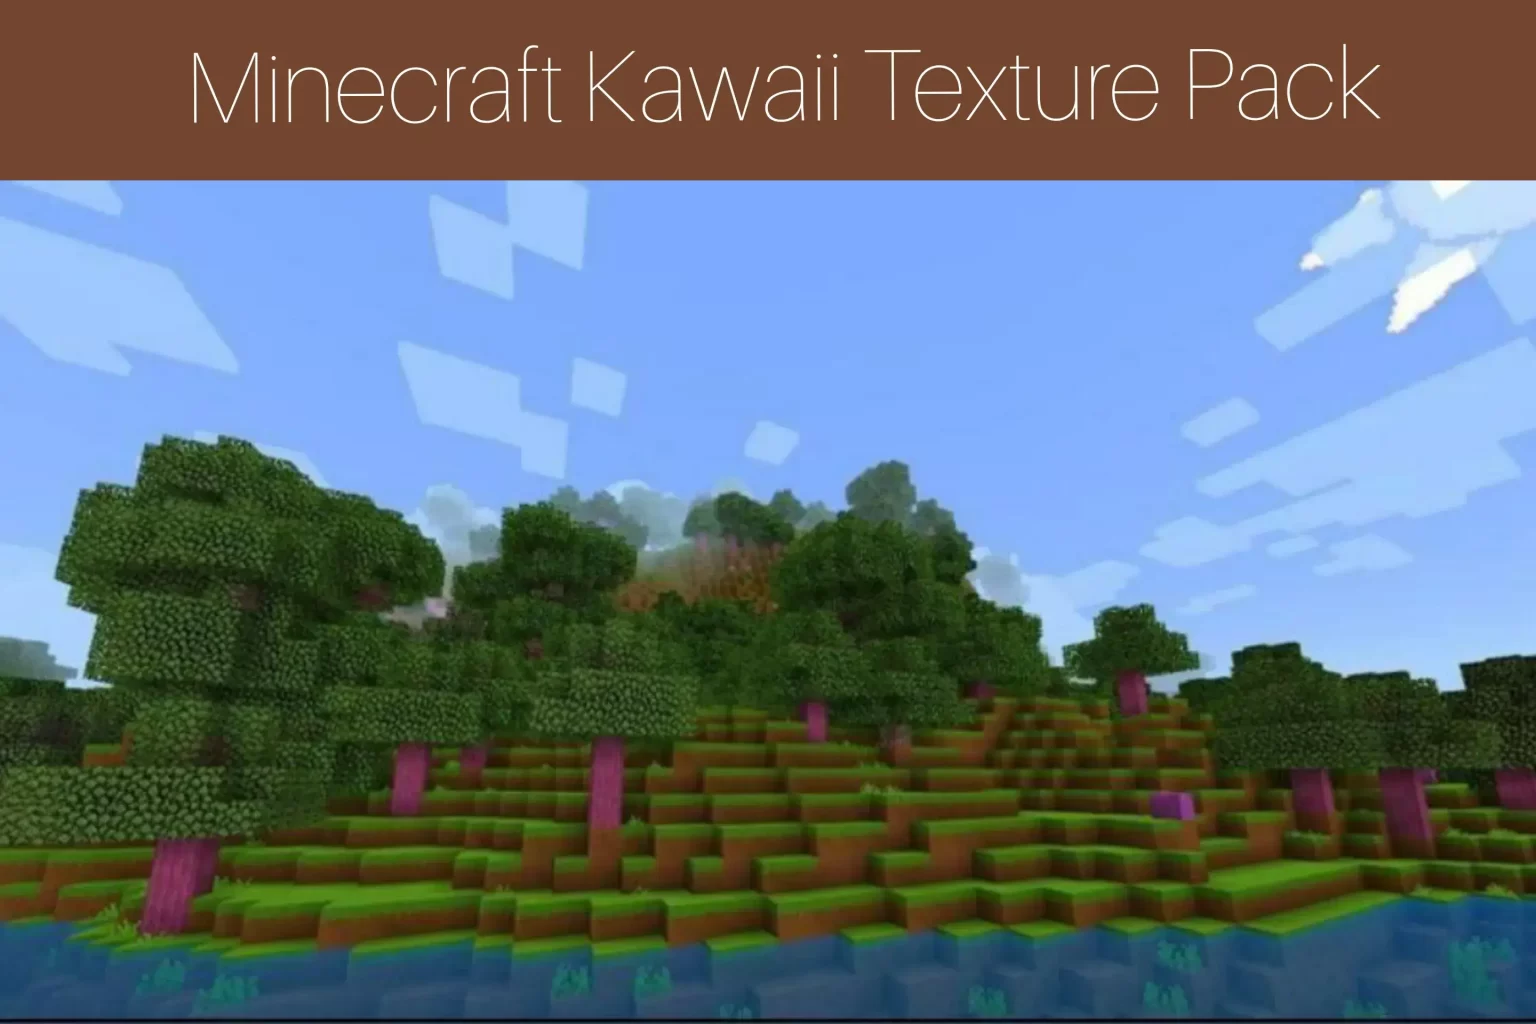 Minecraft Kawaii Texture Pack
